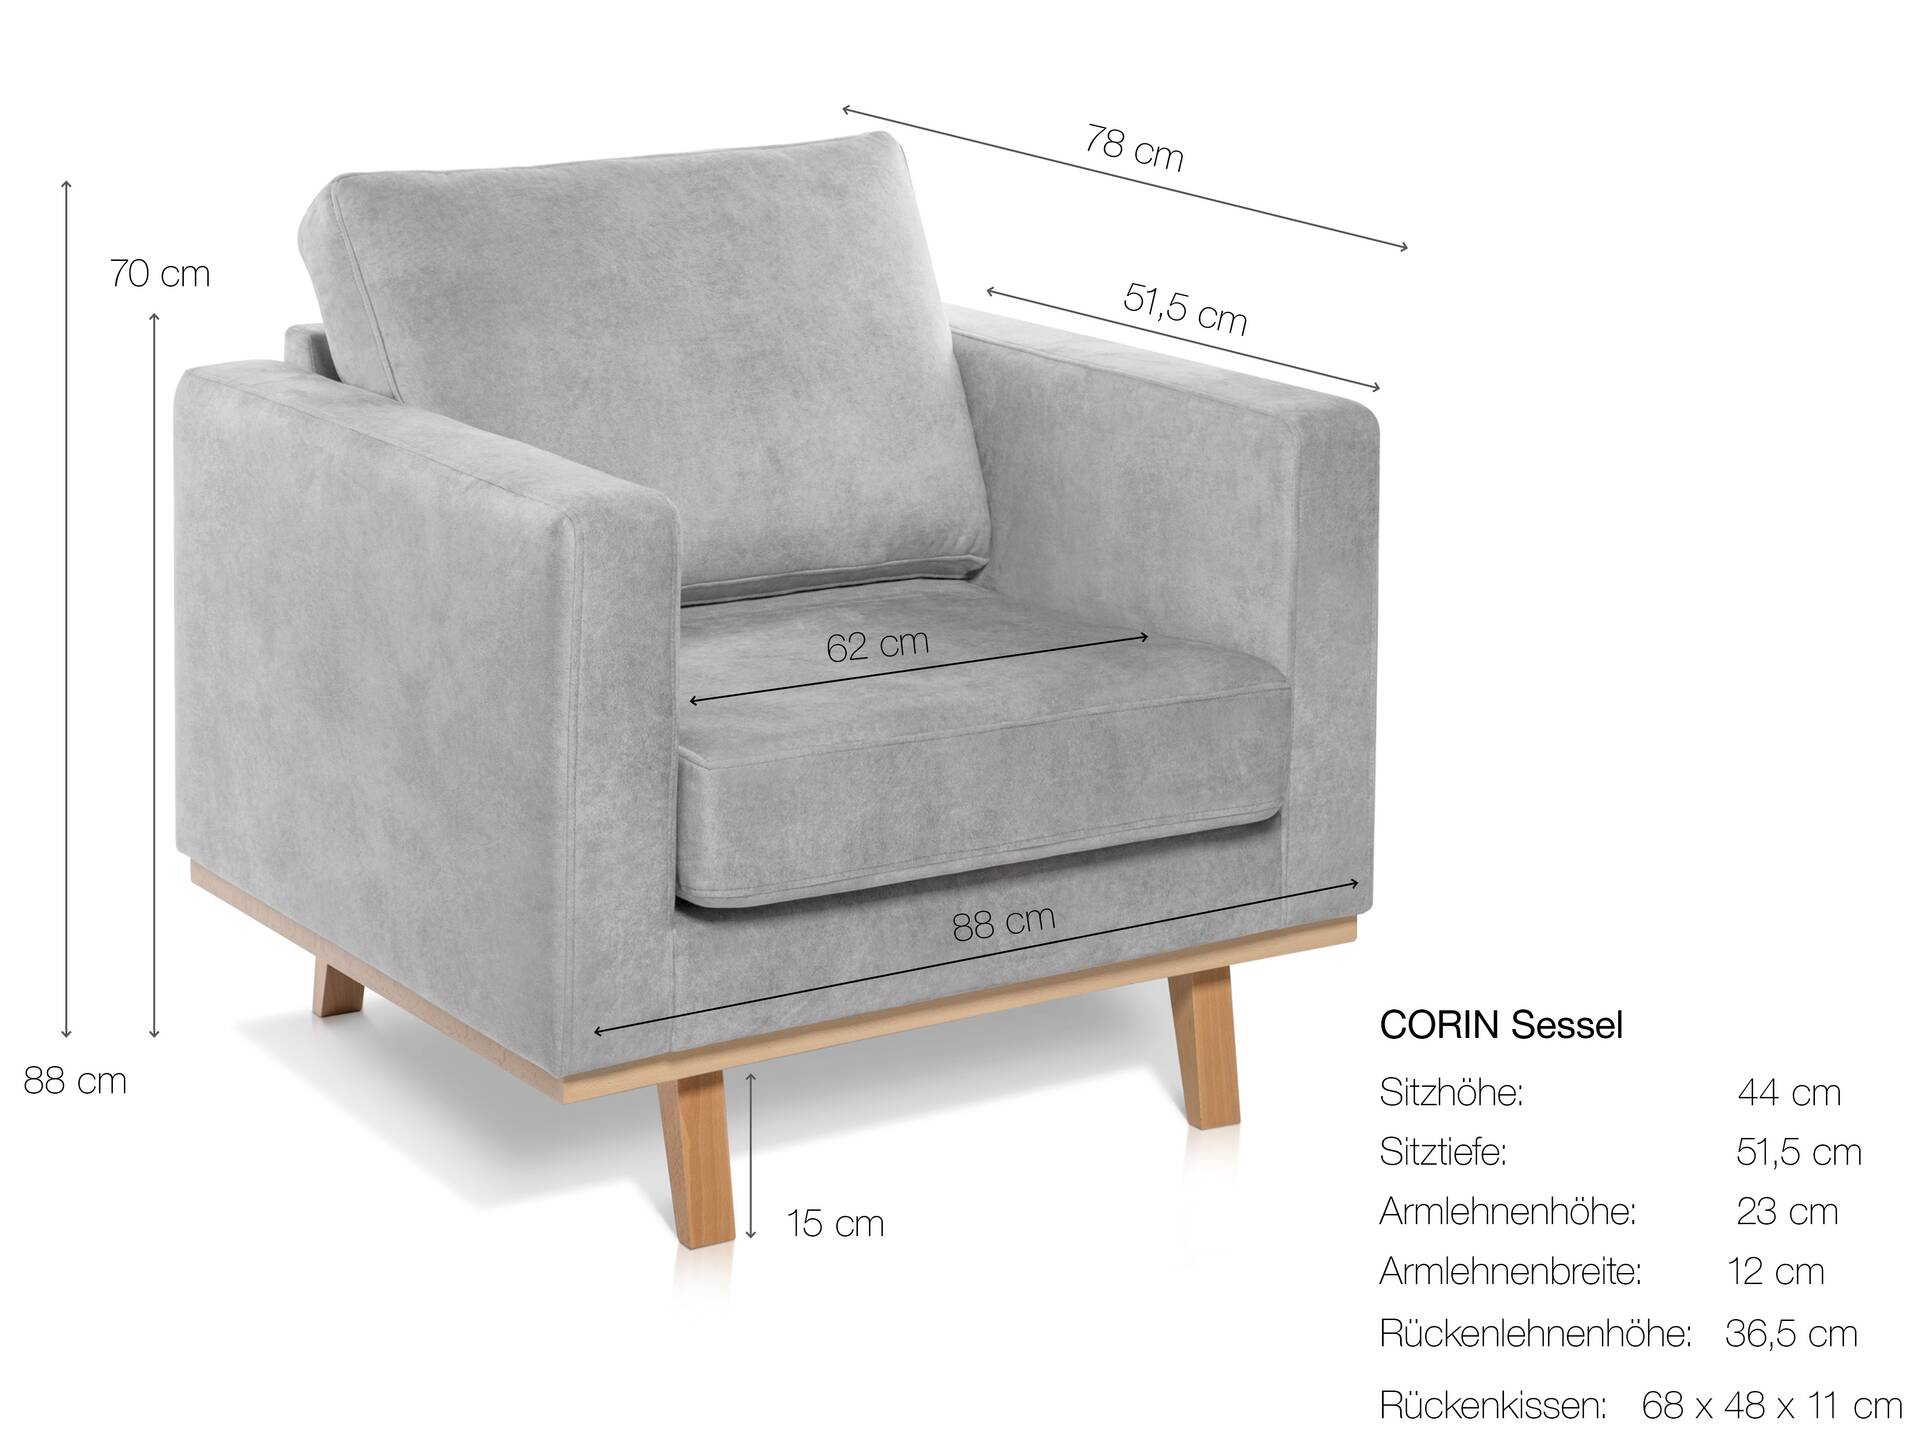 CORIN Sessel mit Echtholz-Untergestell, Bezug in Velour-Optik Mint